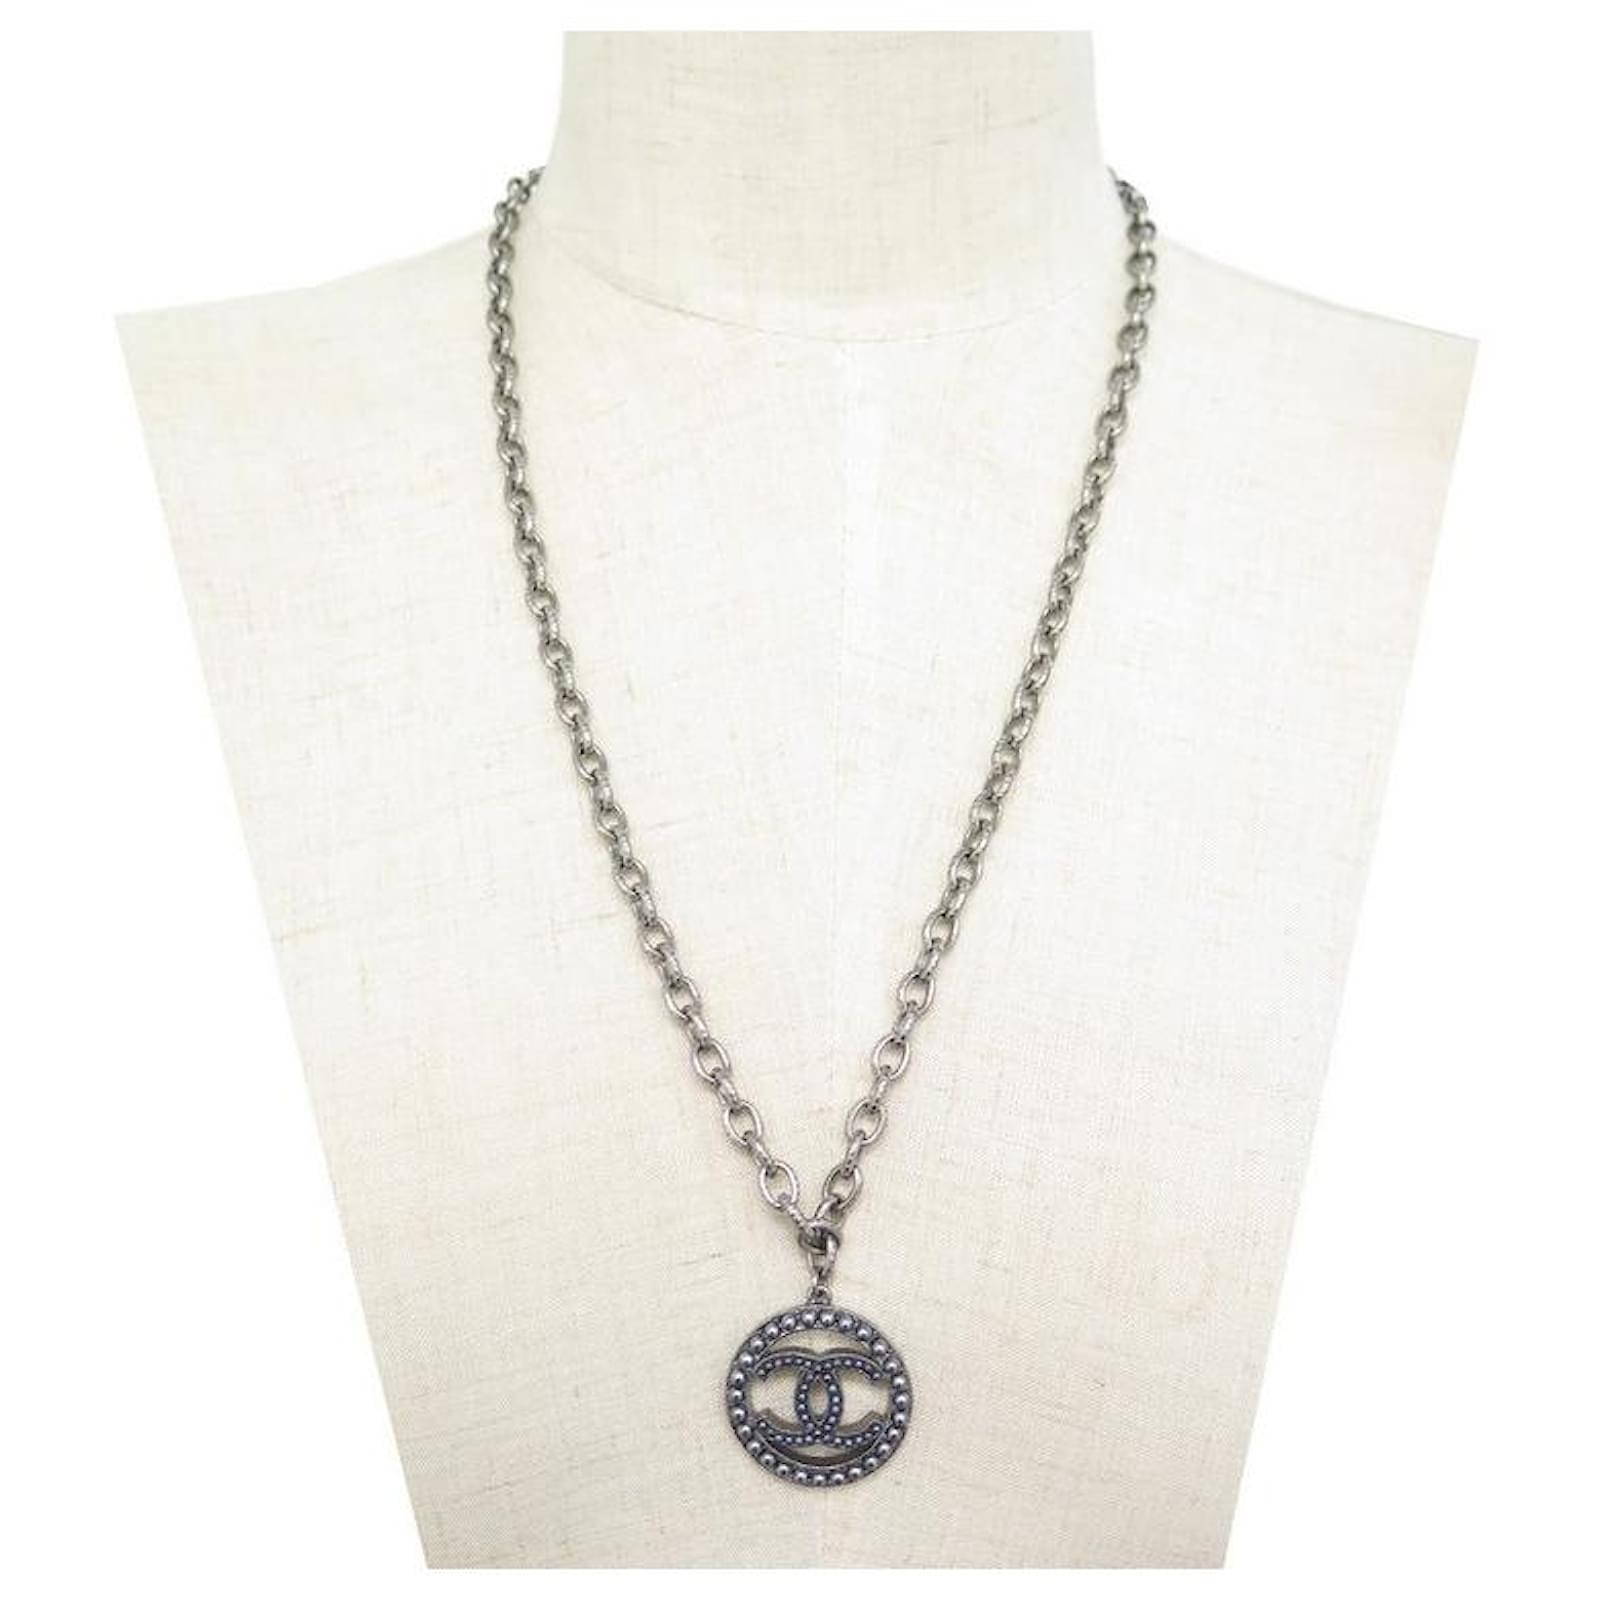 Chanel CHANEL Coco Mark Rinstone Pearl Accessories 06a Necklace